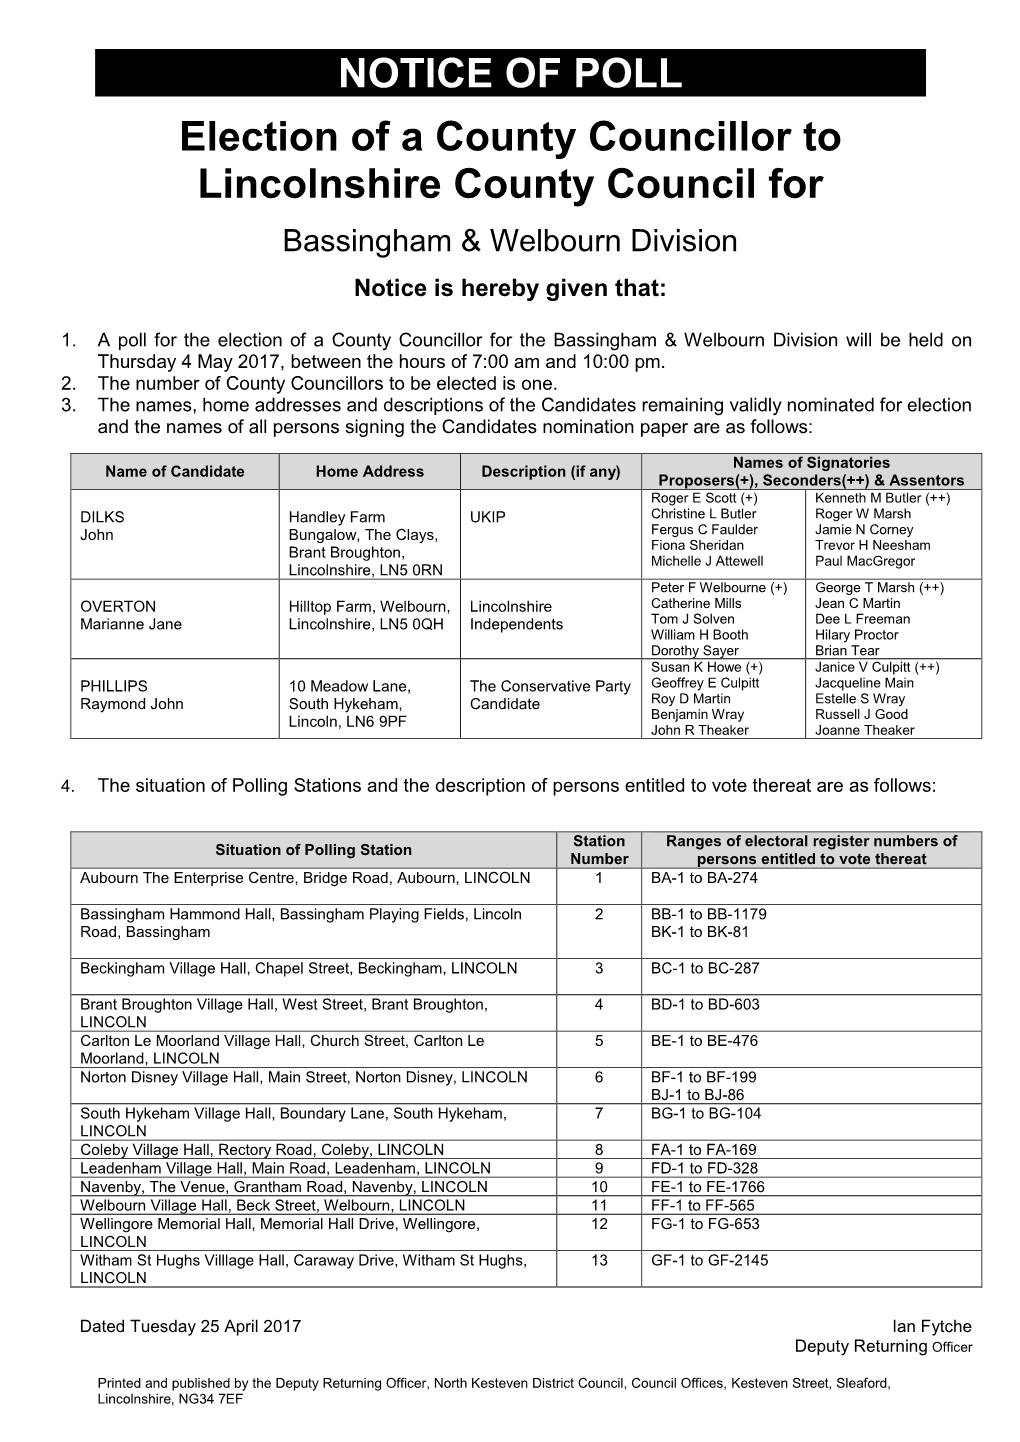 Notice of Poll Bassingham & Welbourn